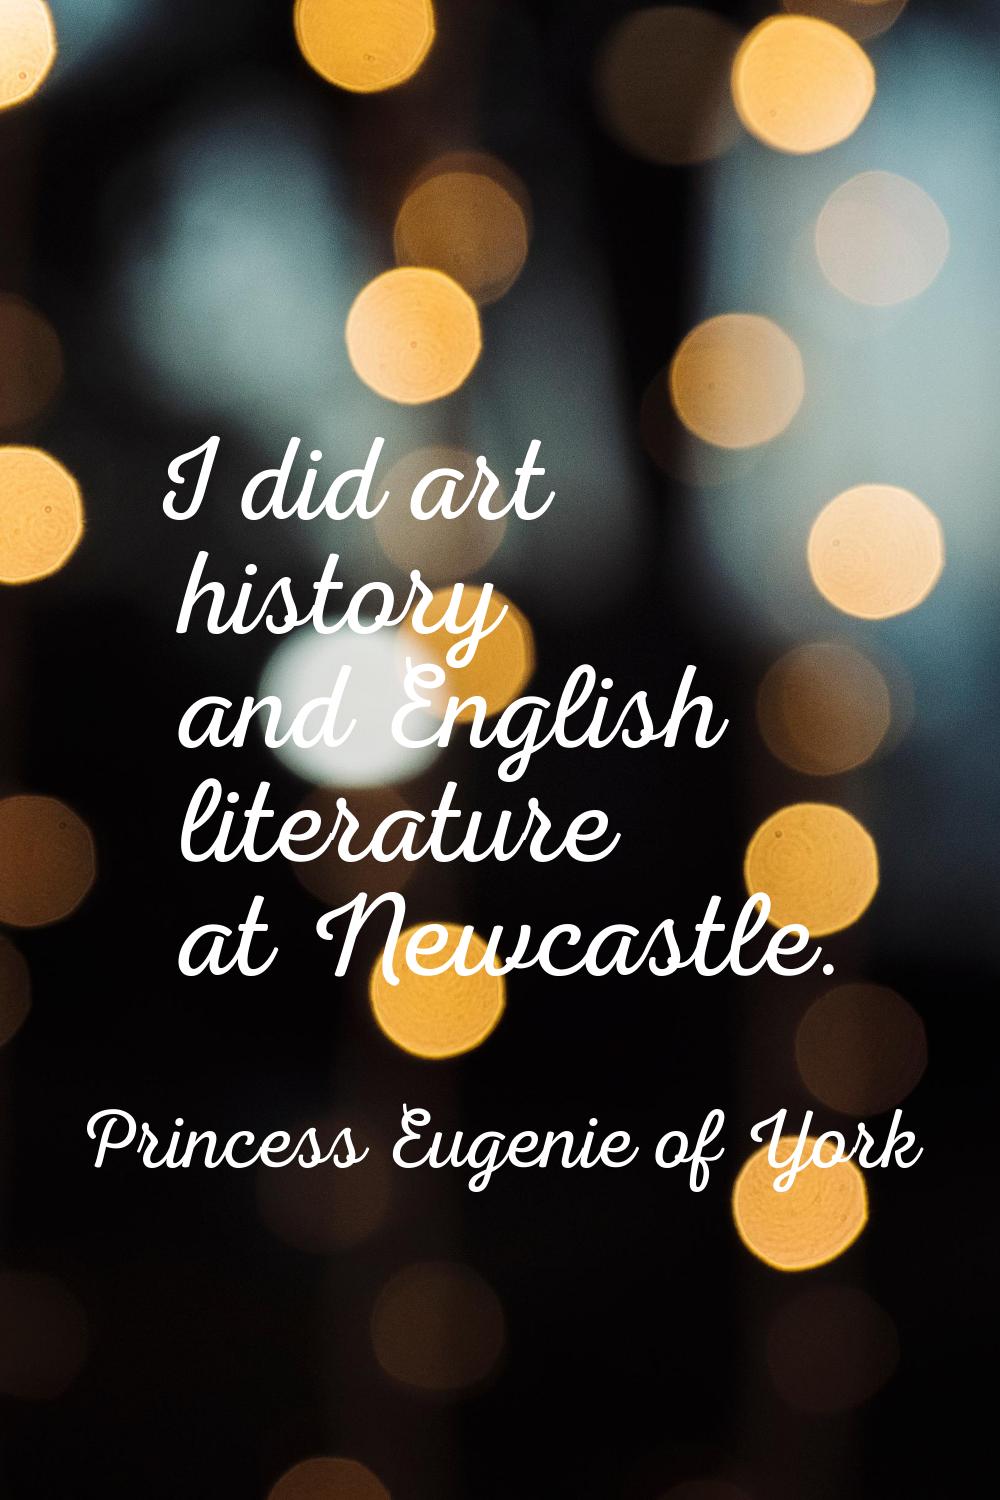 I did art history and English literature at Newcastle.